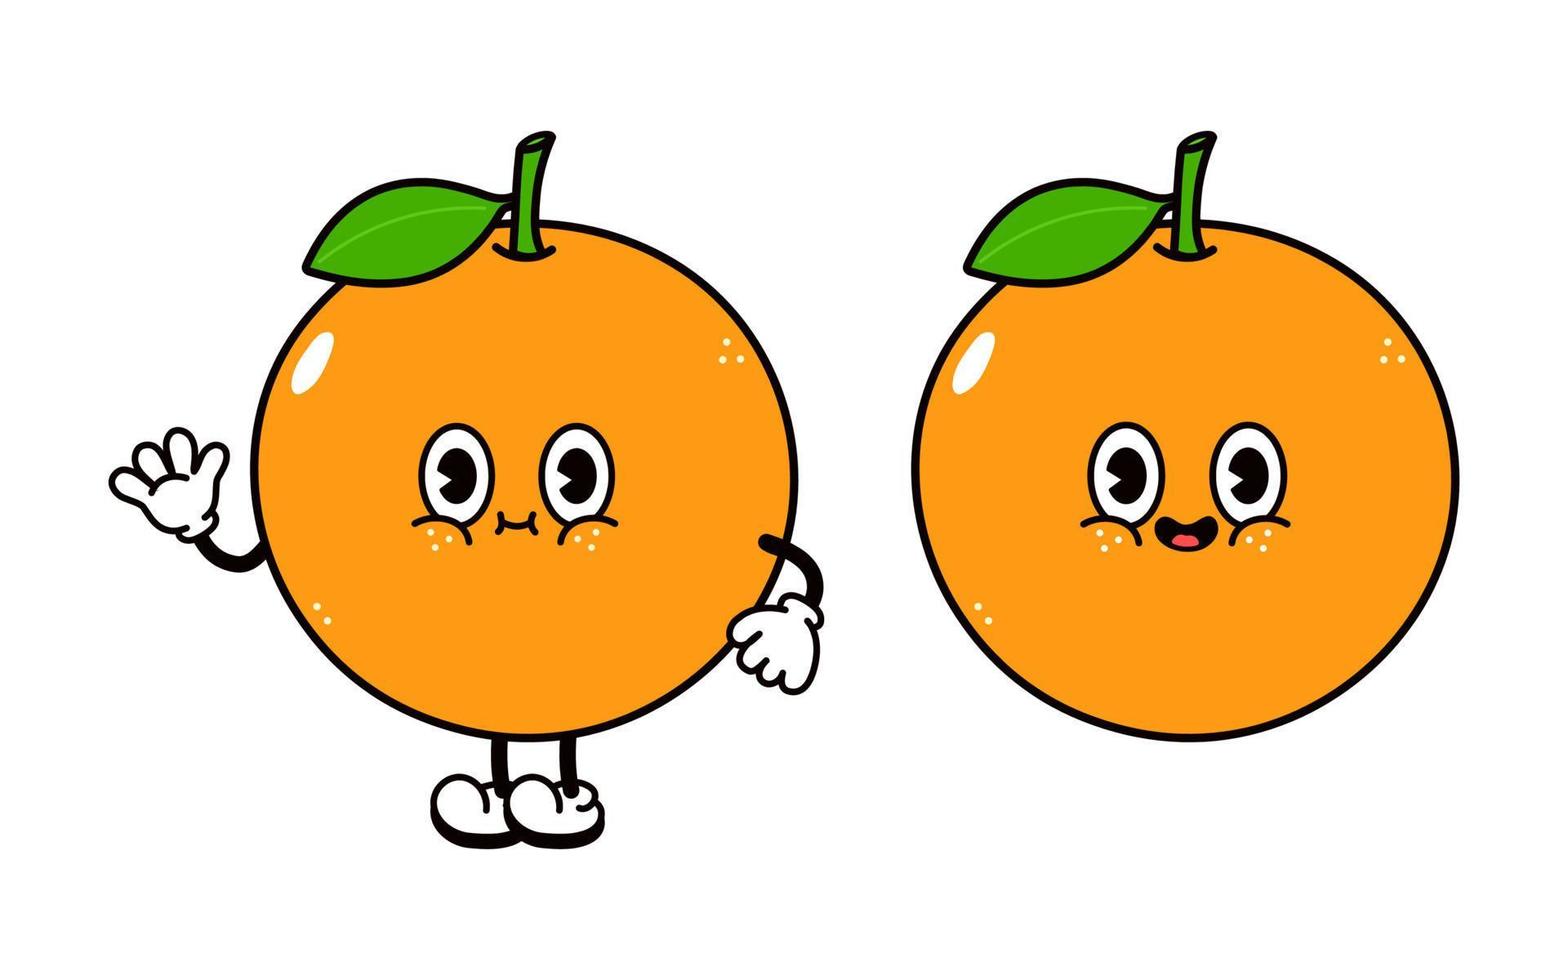 Cute funny orange fruit waving hand character. Vector hand drawn traditional cartoon vintage, retro, kawaii character illustration icon. Isolated on white background. Orange fruit character concept